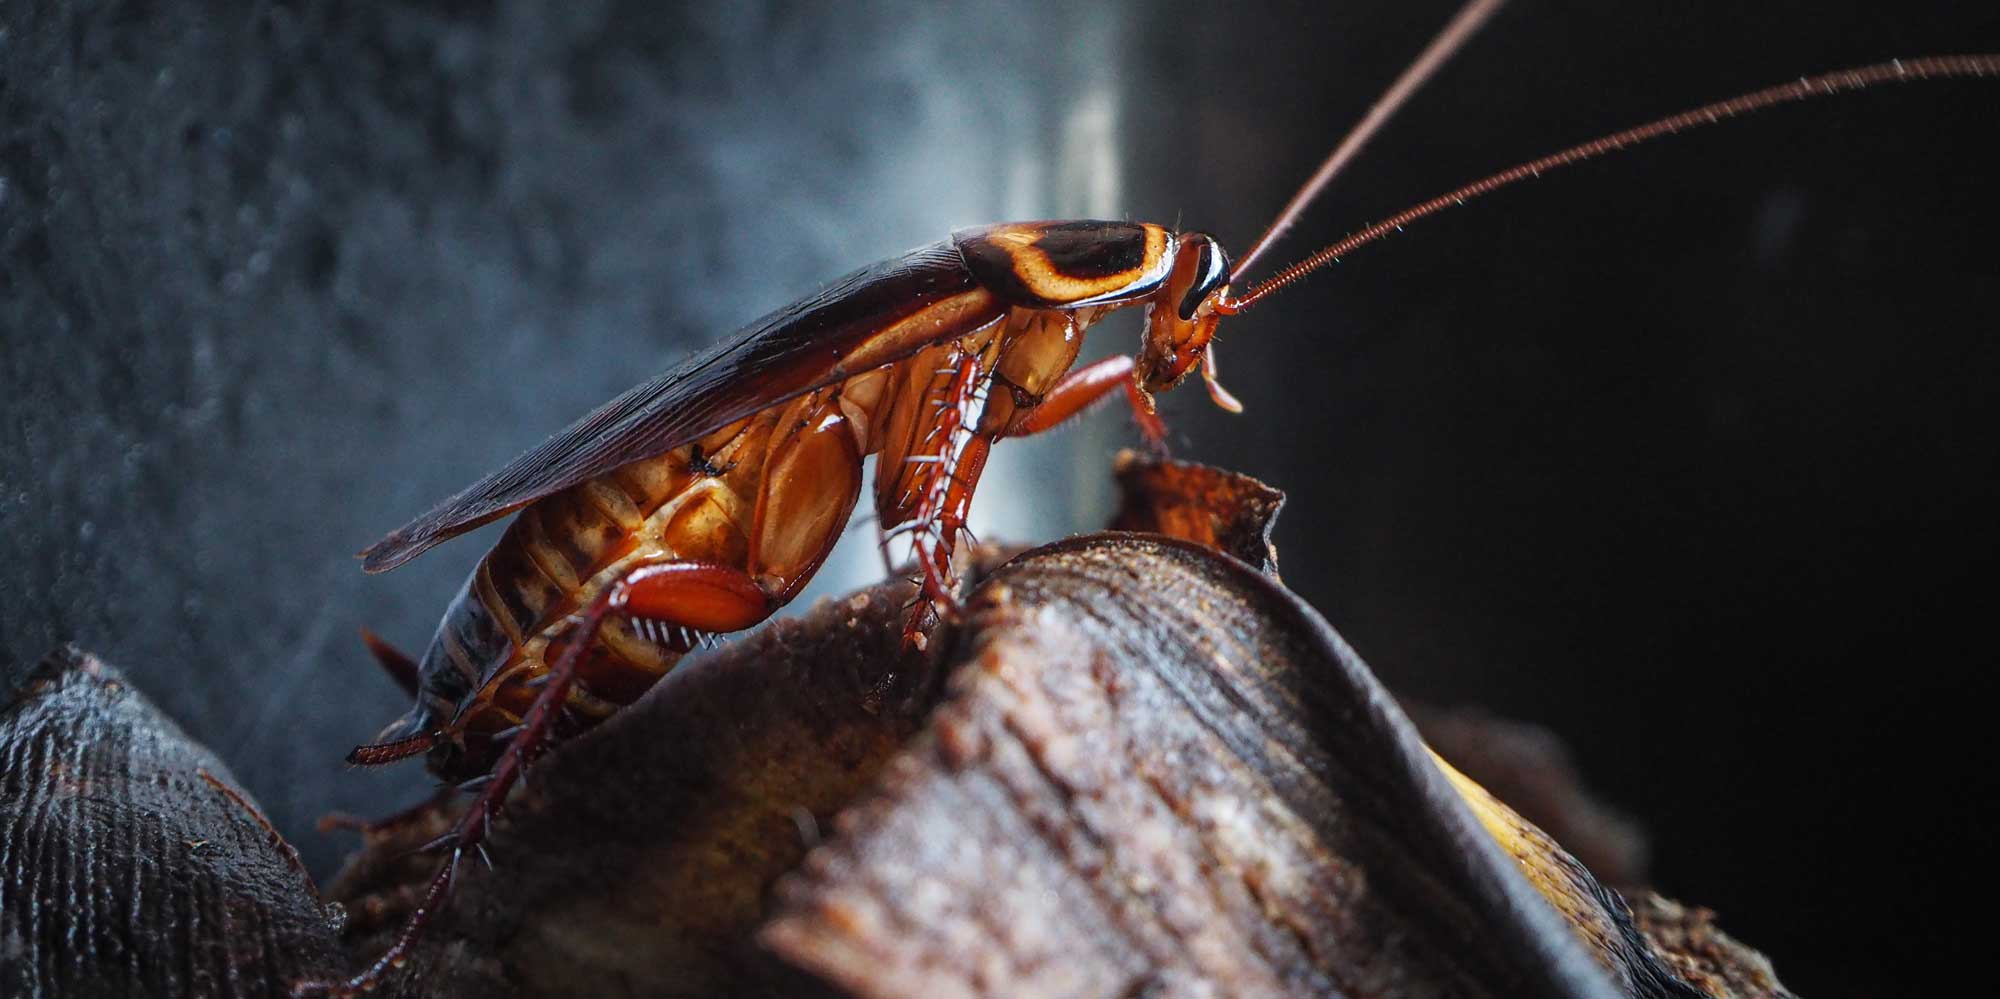 Cockroach Pest Control 24 Seven